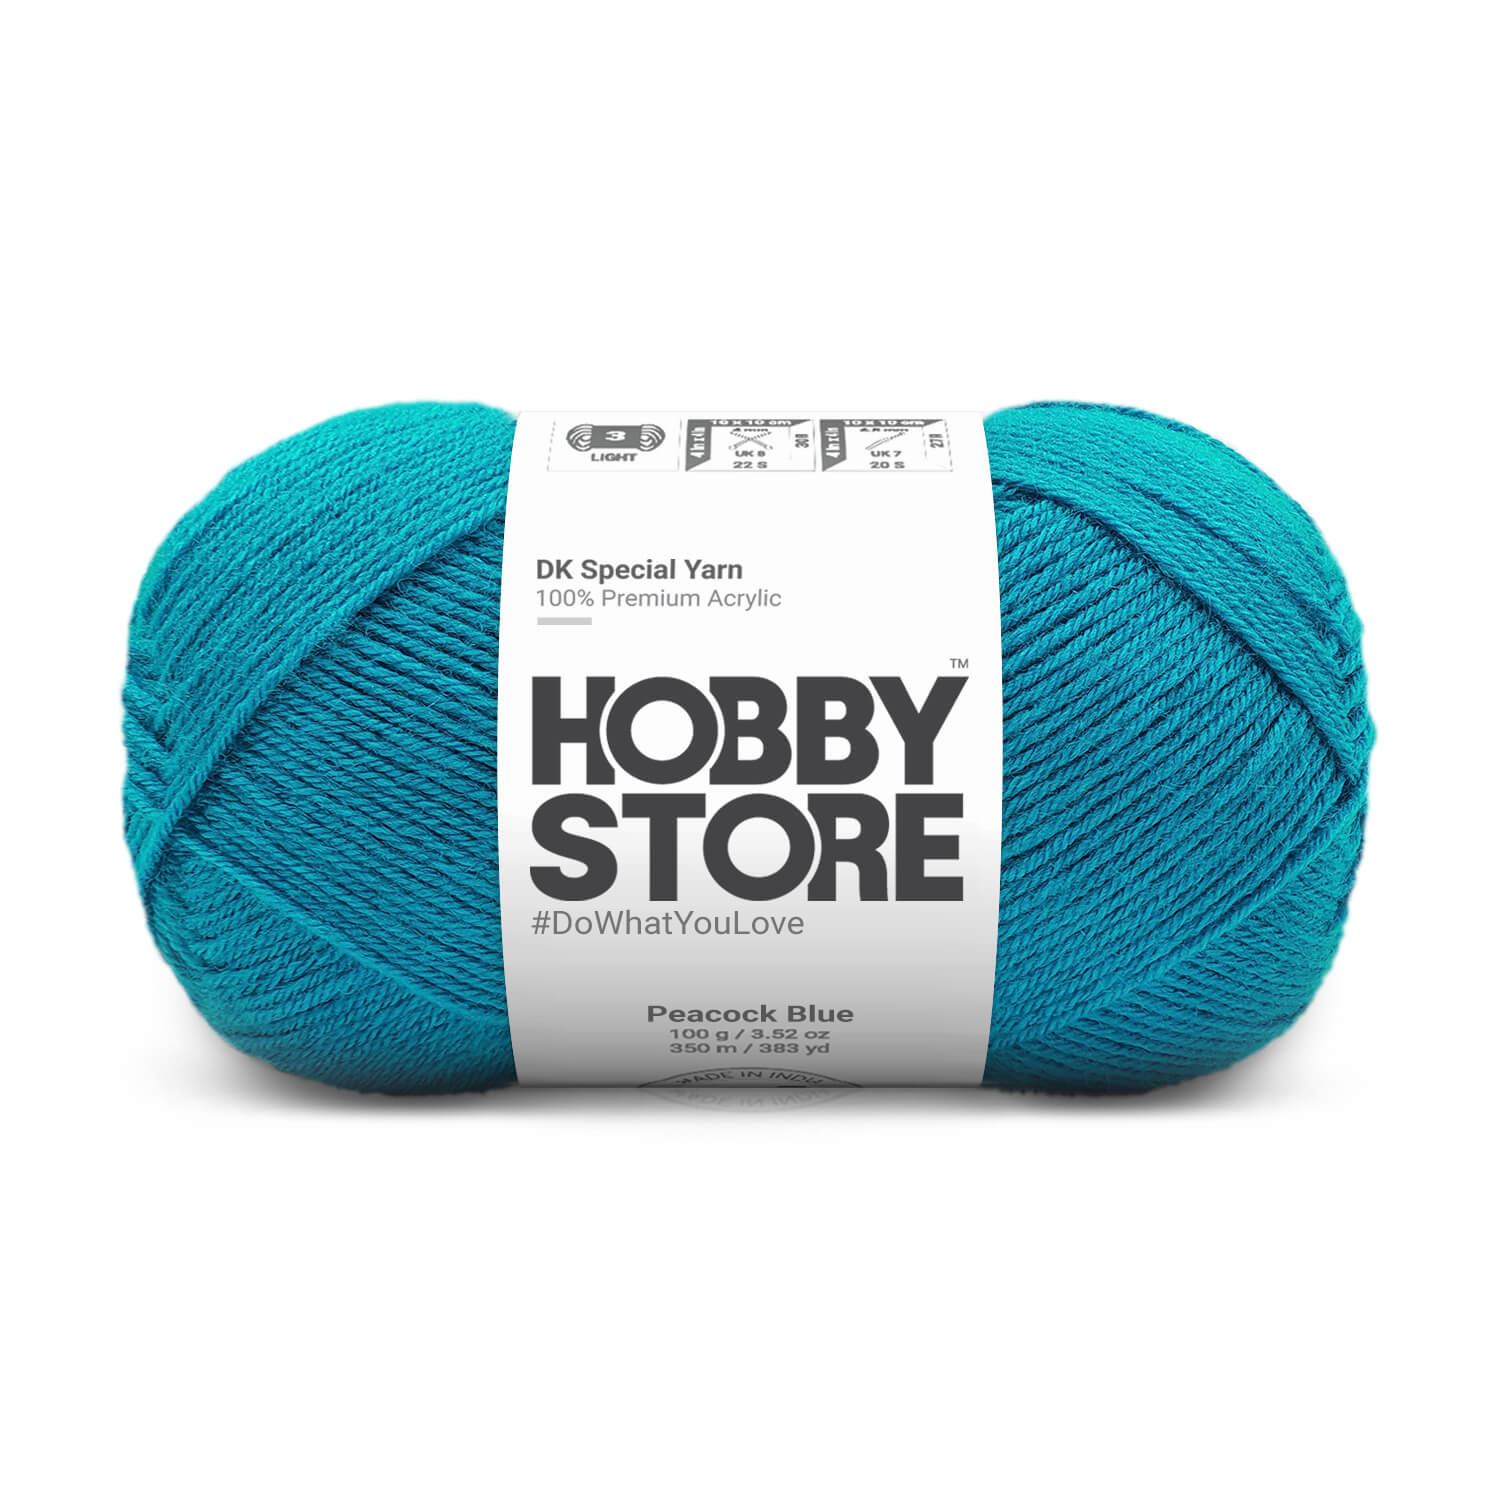 Hobby Store DK Special Yarn - Peacock Blue 5013